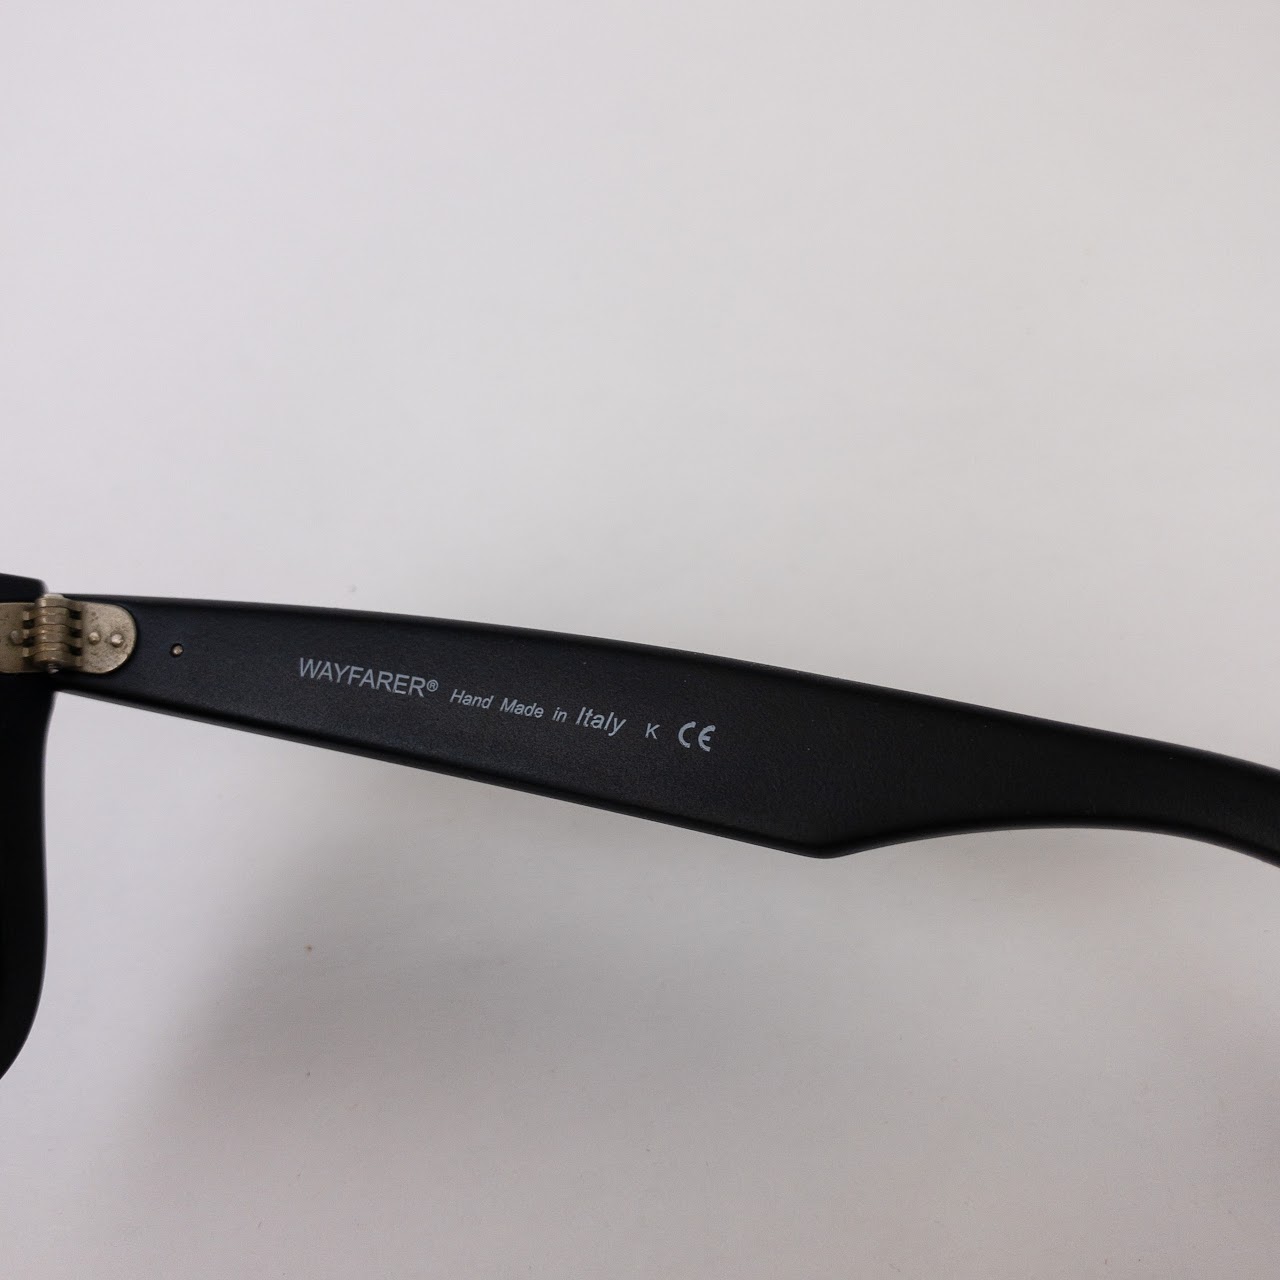 Ray-Ban Mirrored Wayfarer Sunglasses